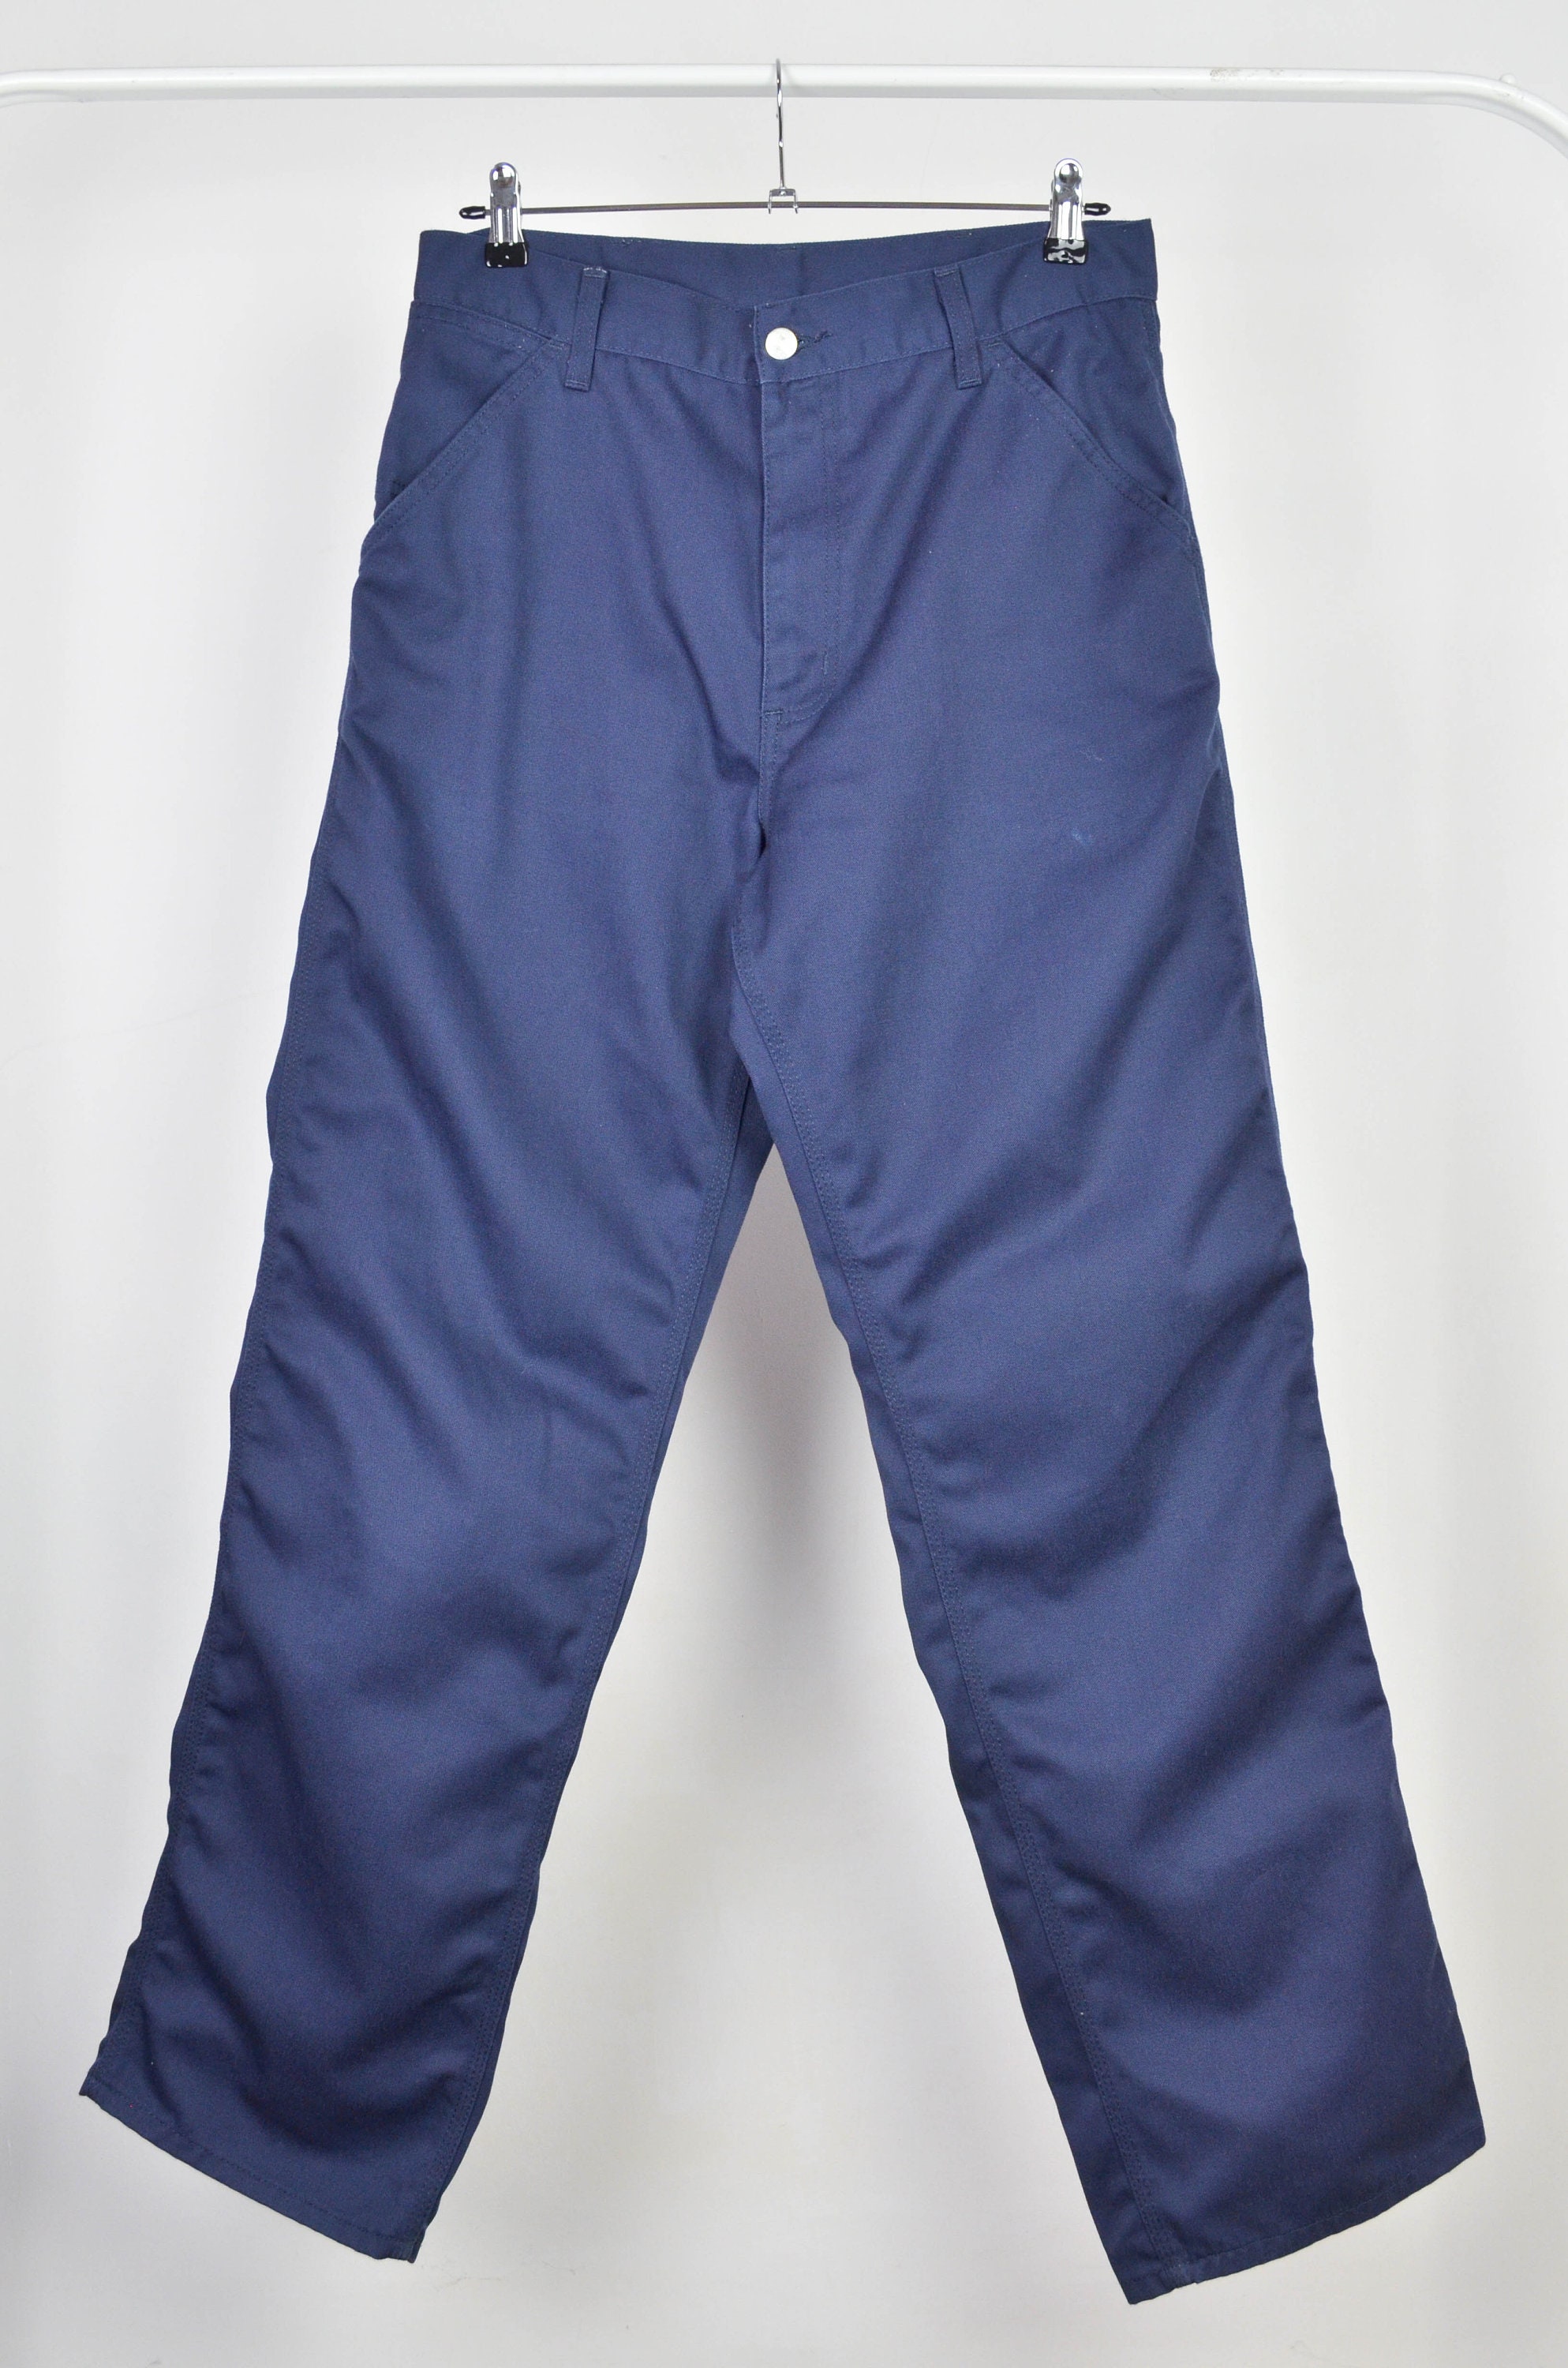 Men's Carhartt Navy Simple Pant Workwear Pants Size 31 | Etsy